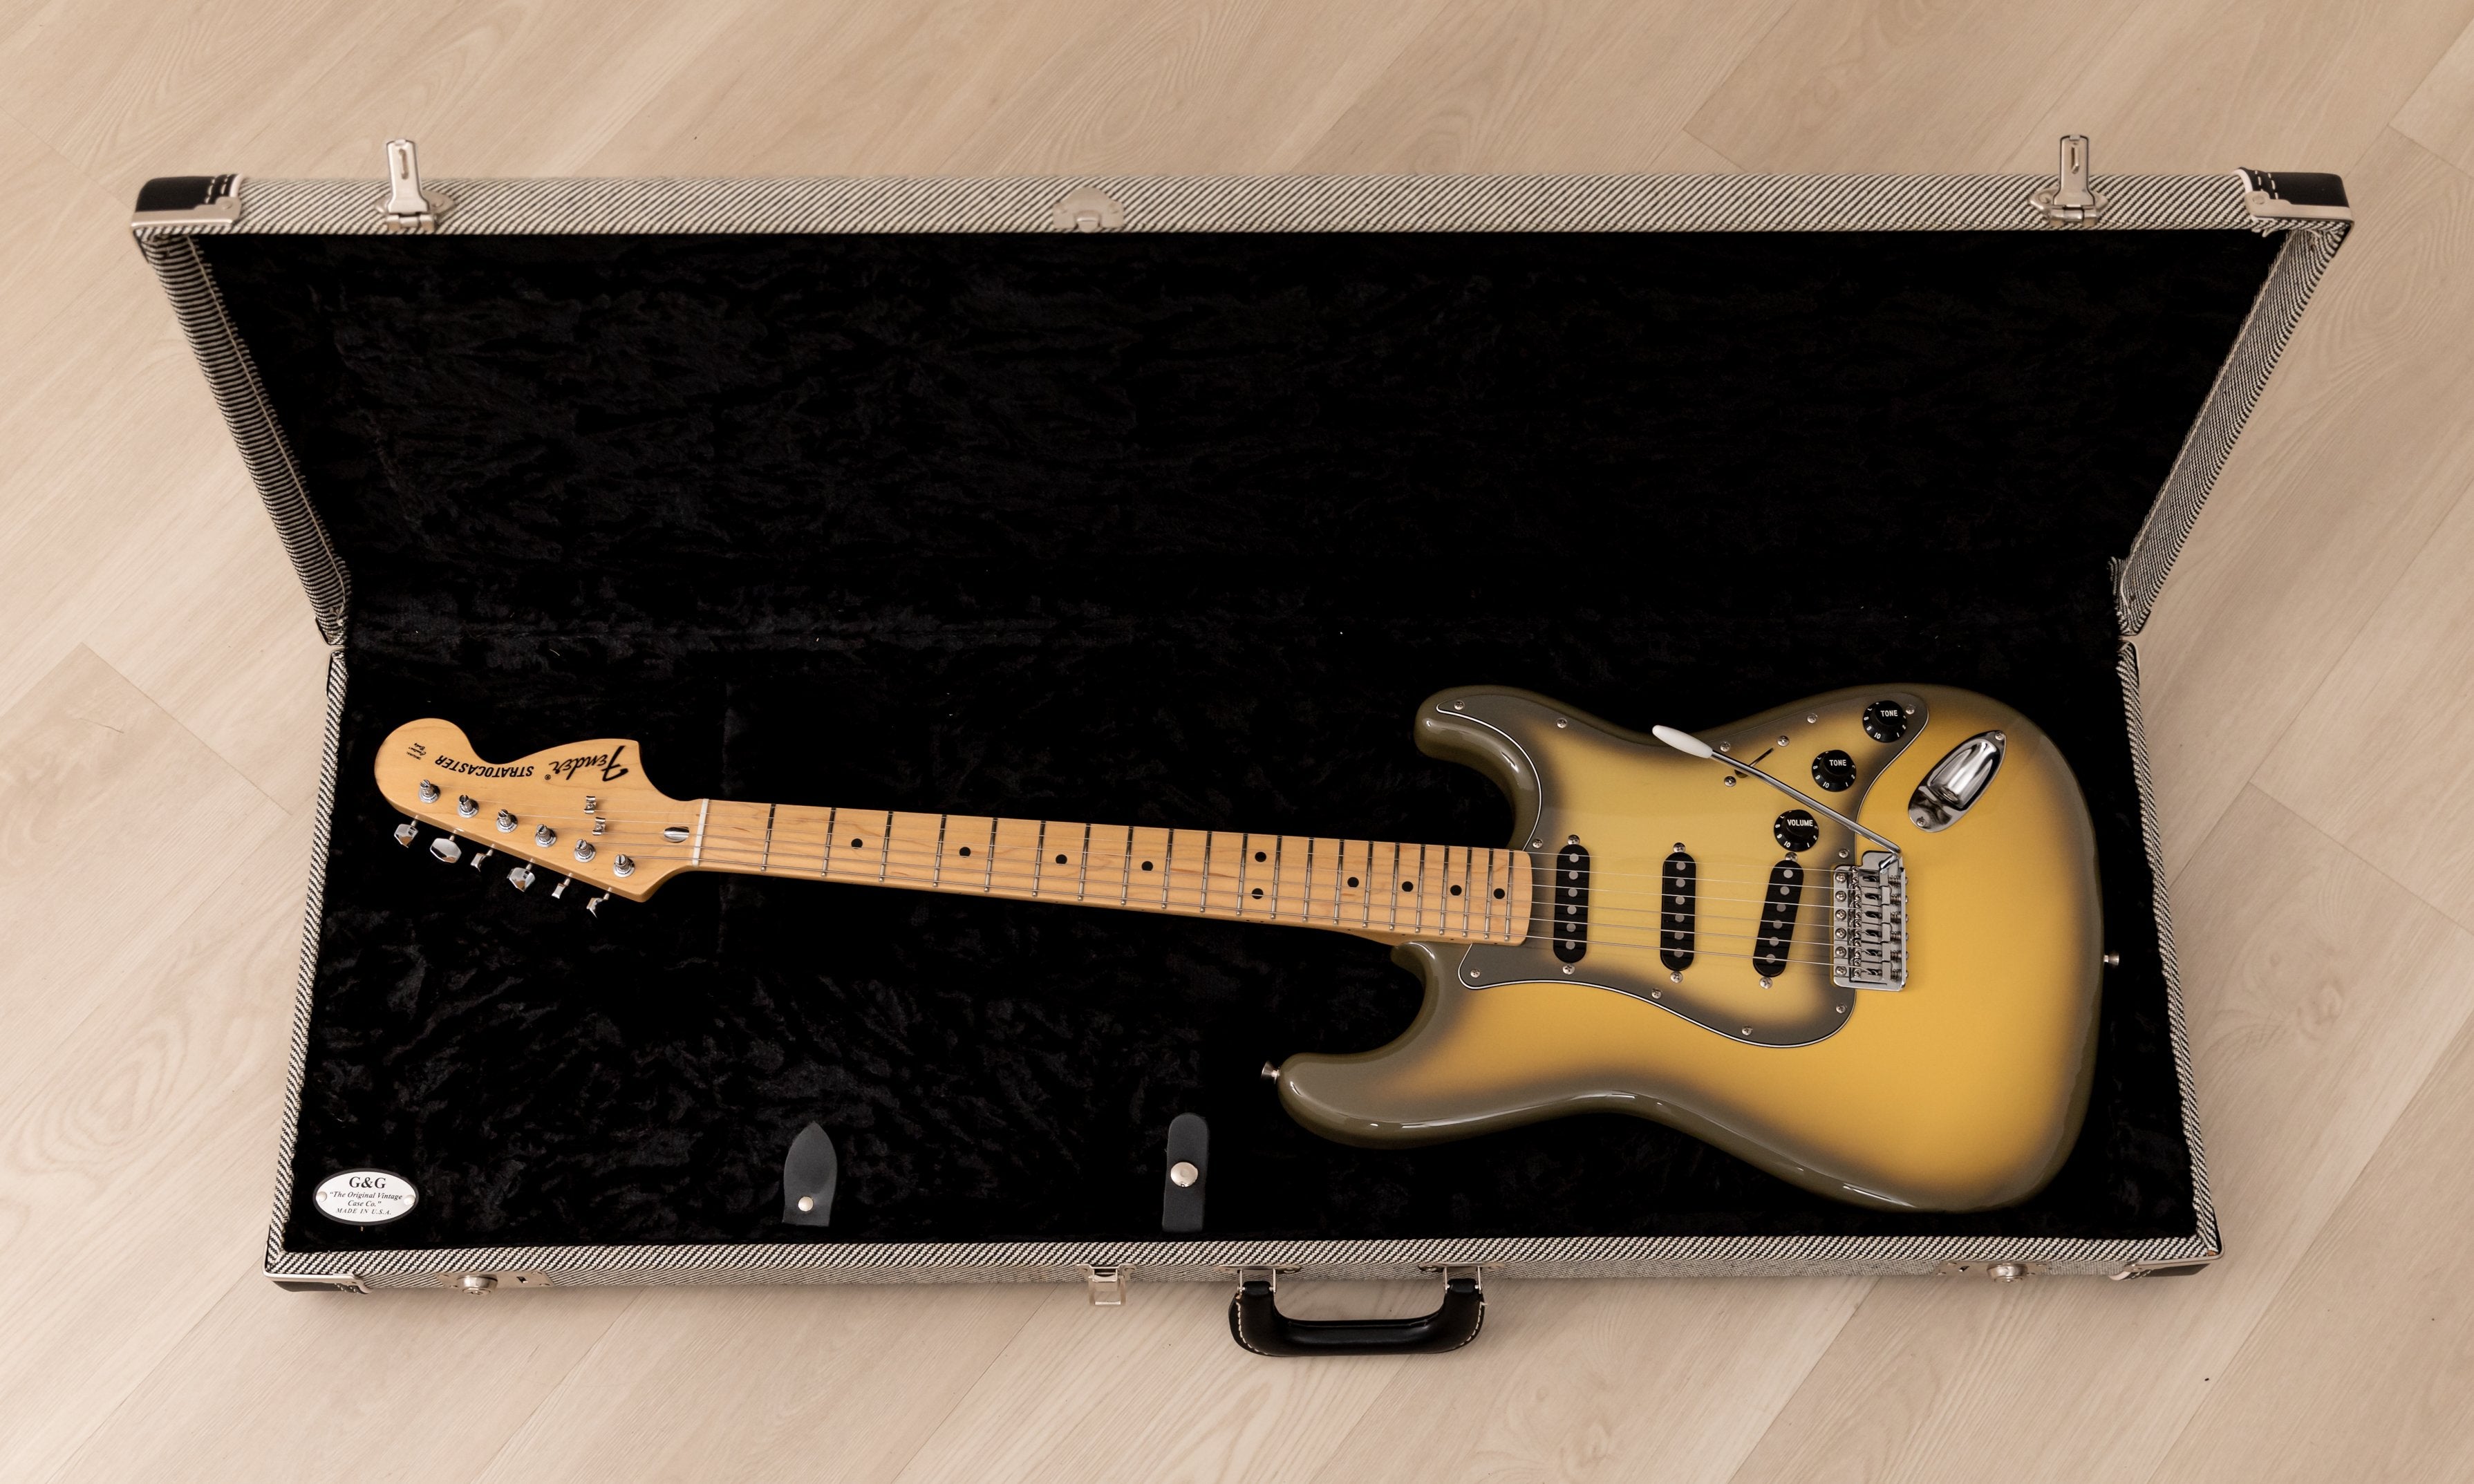 2004 Fender Stratocaster ’72 Vintage Reissue ST72 Limited Edition Antigua Near-Mint w/ G&G Case, Japan CIJ